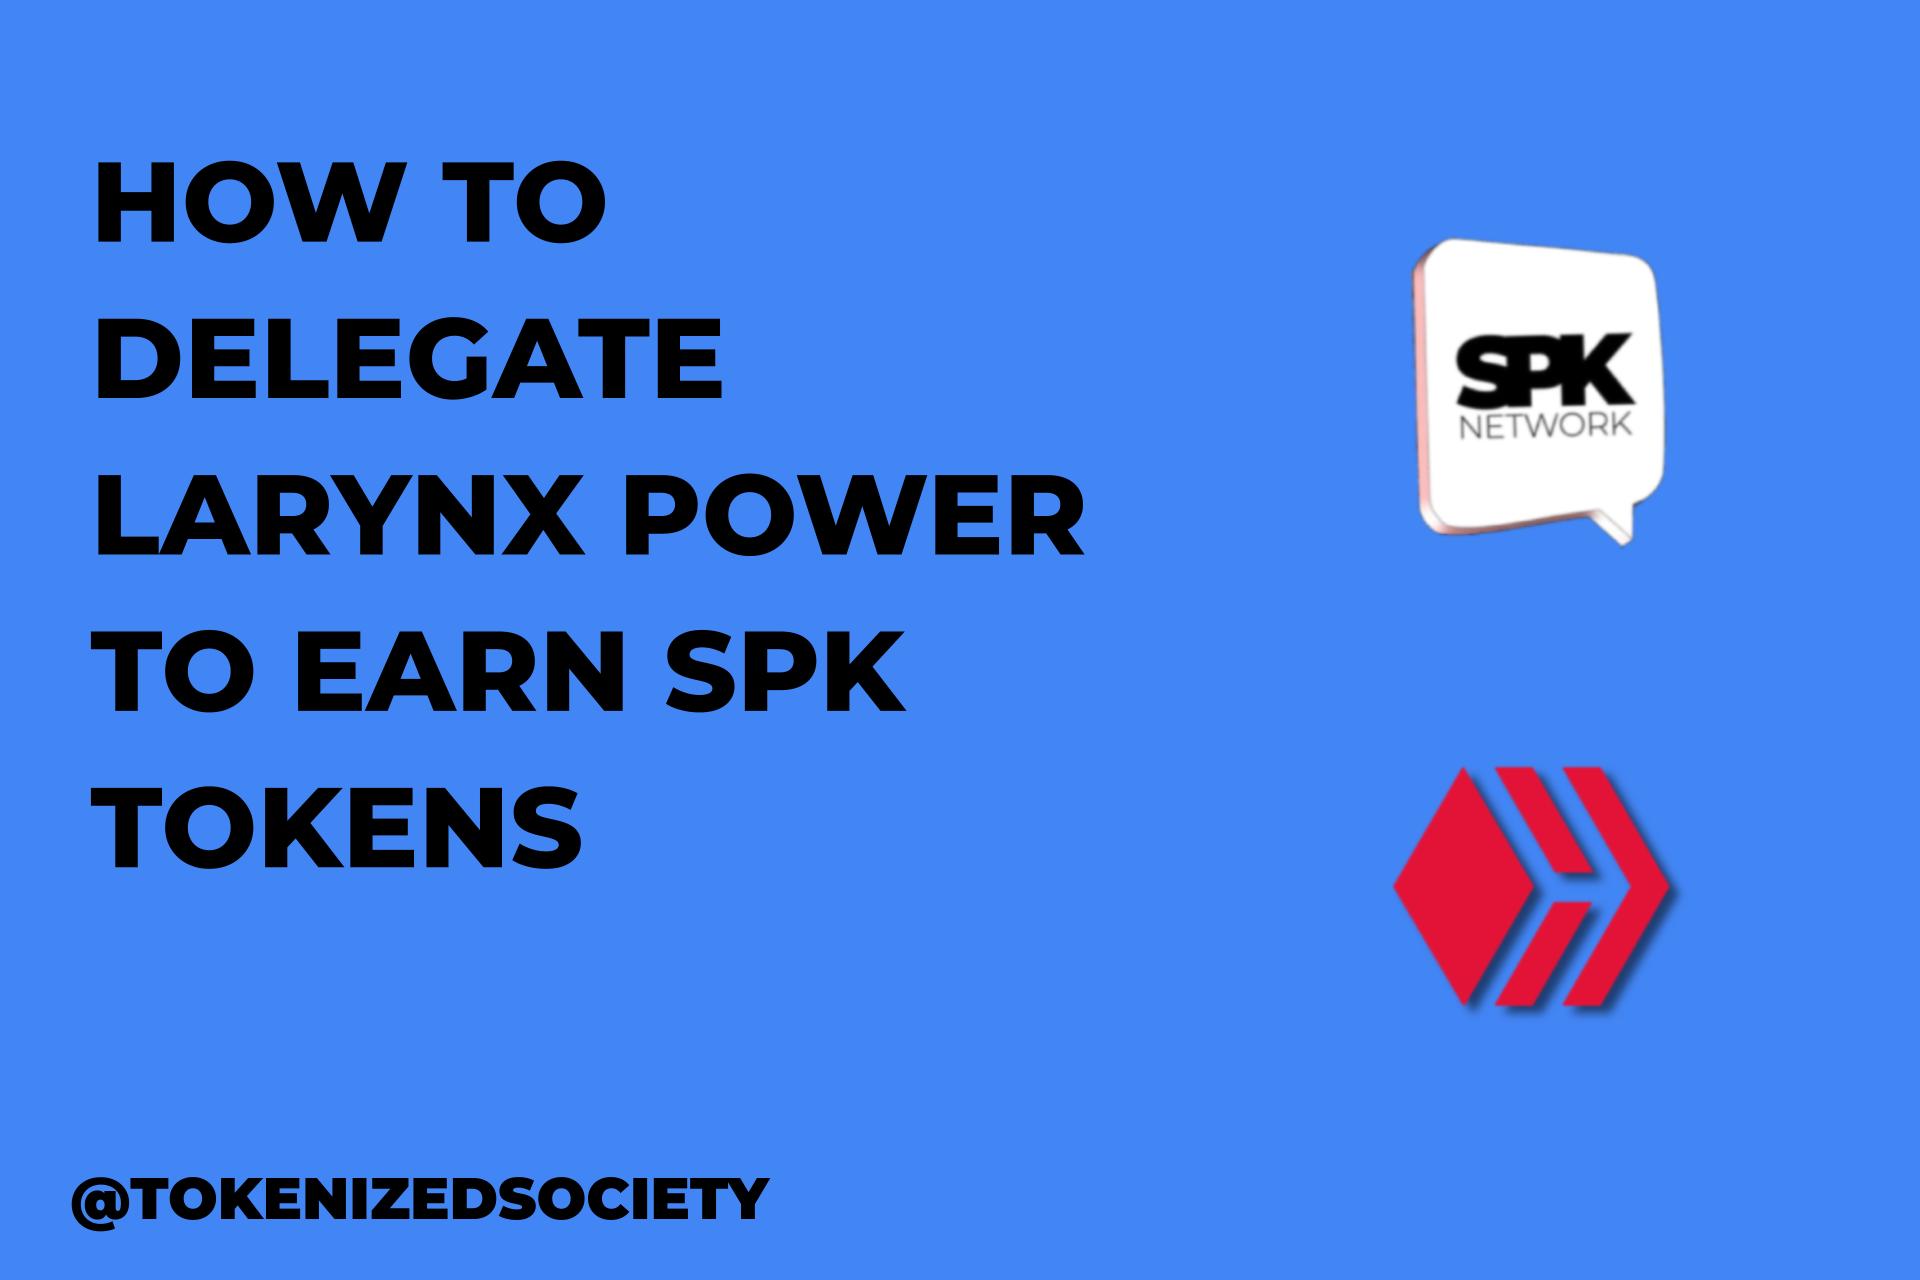 @tokenizedsociety/how-to-delegate-larynx-to-earn-spk-tokens